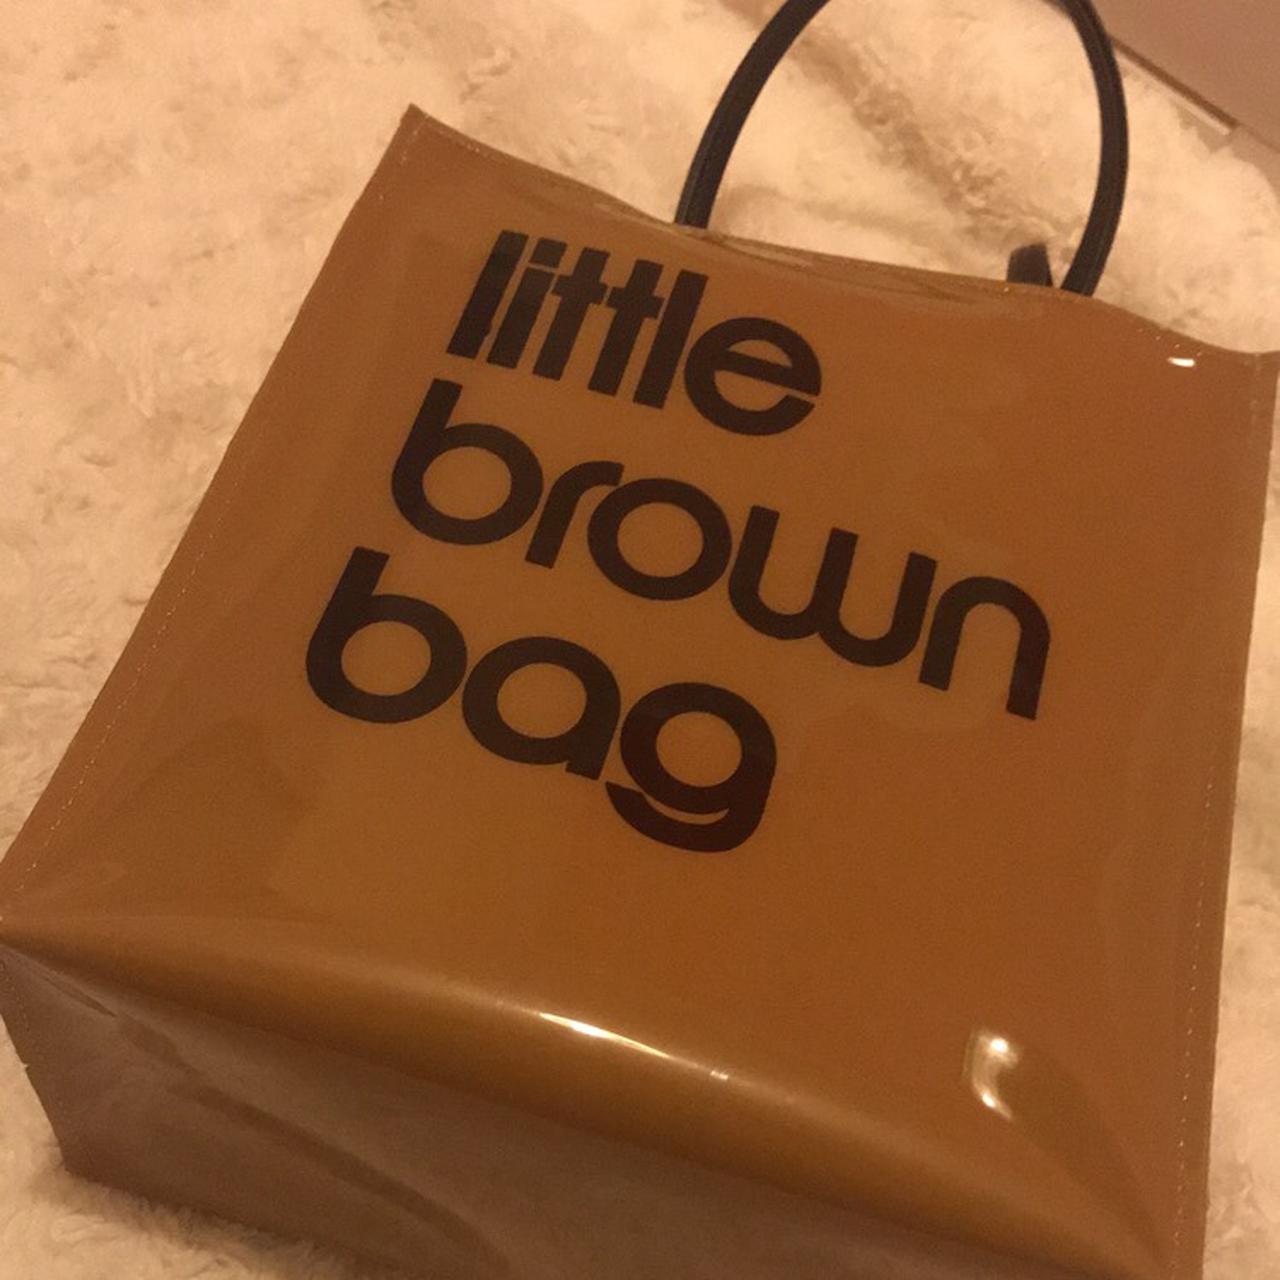 Little Brown Bag 